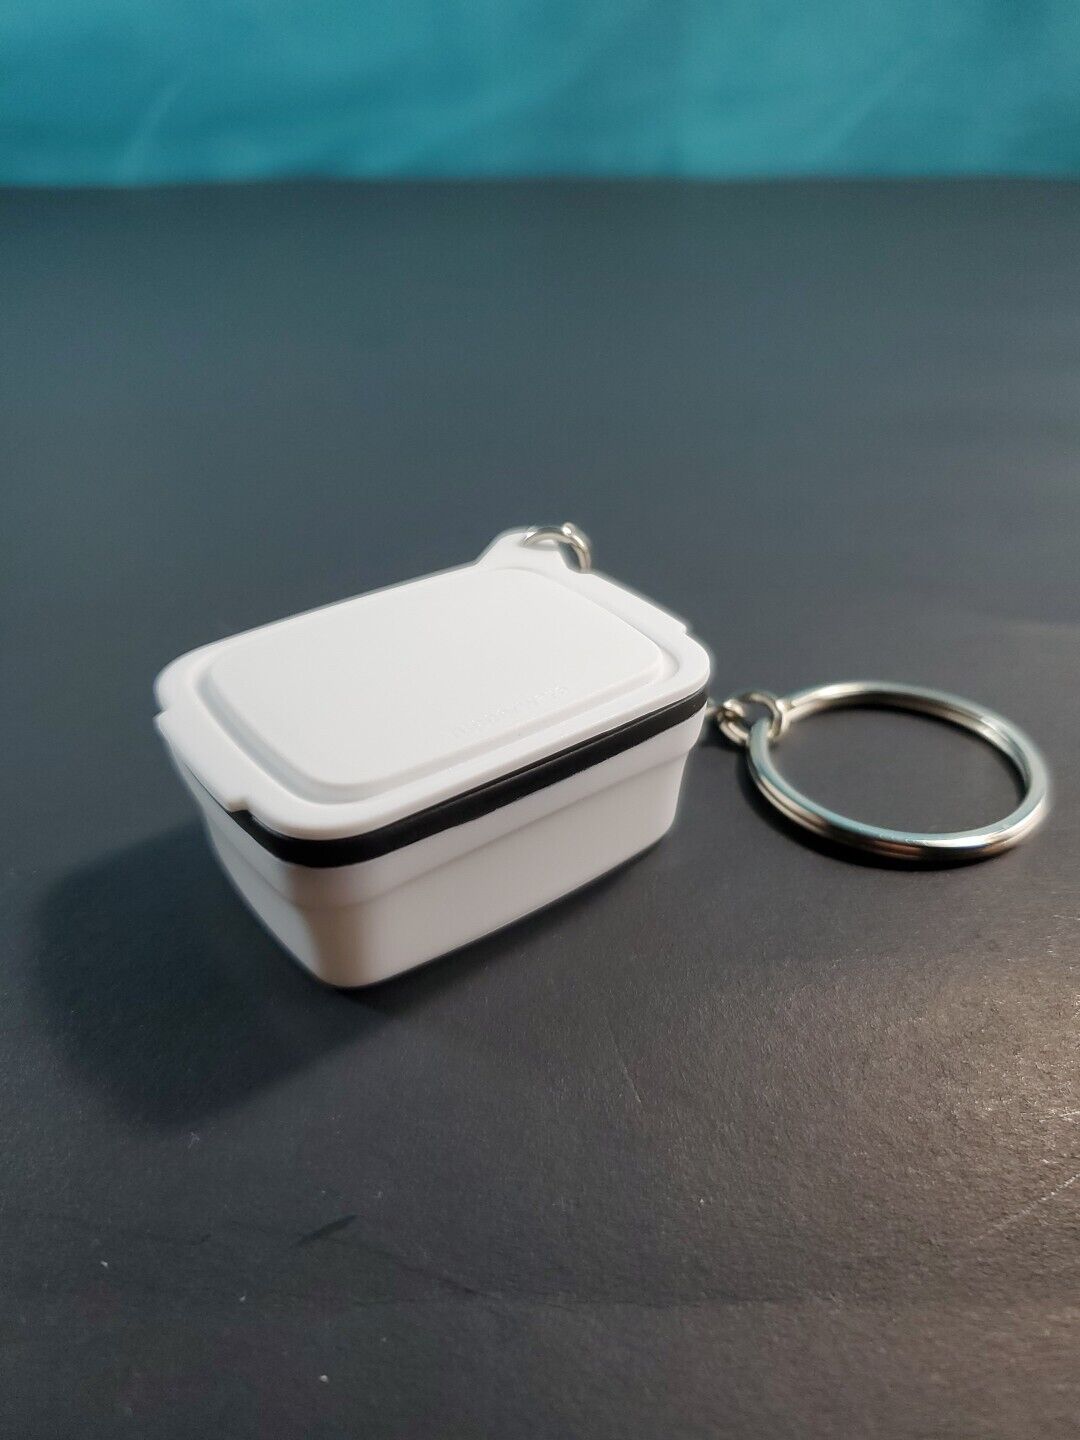 Tupperware Keychain Mini BreadSmart Smart Bread Box Travel Container Opens Sale